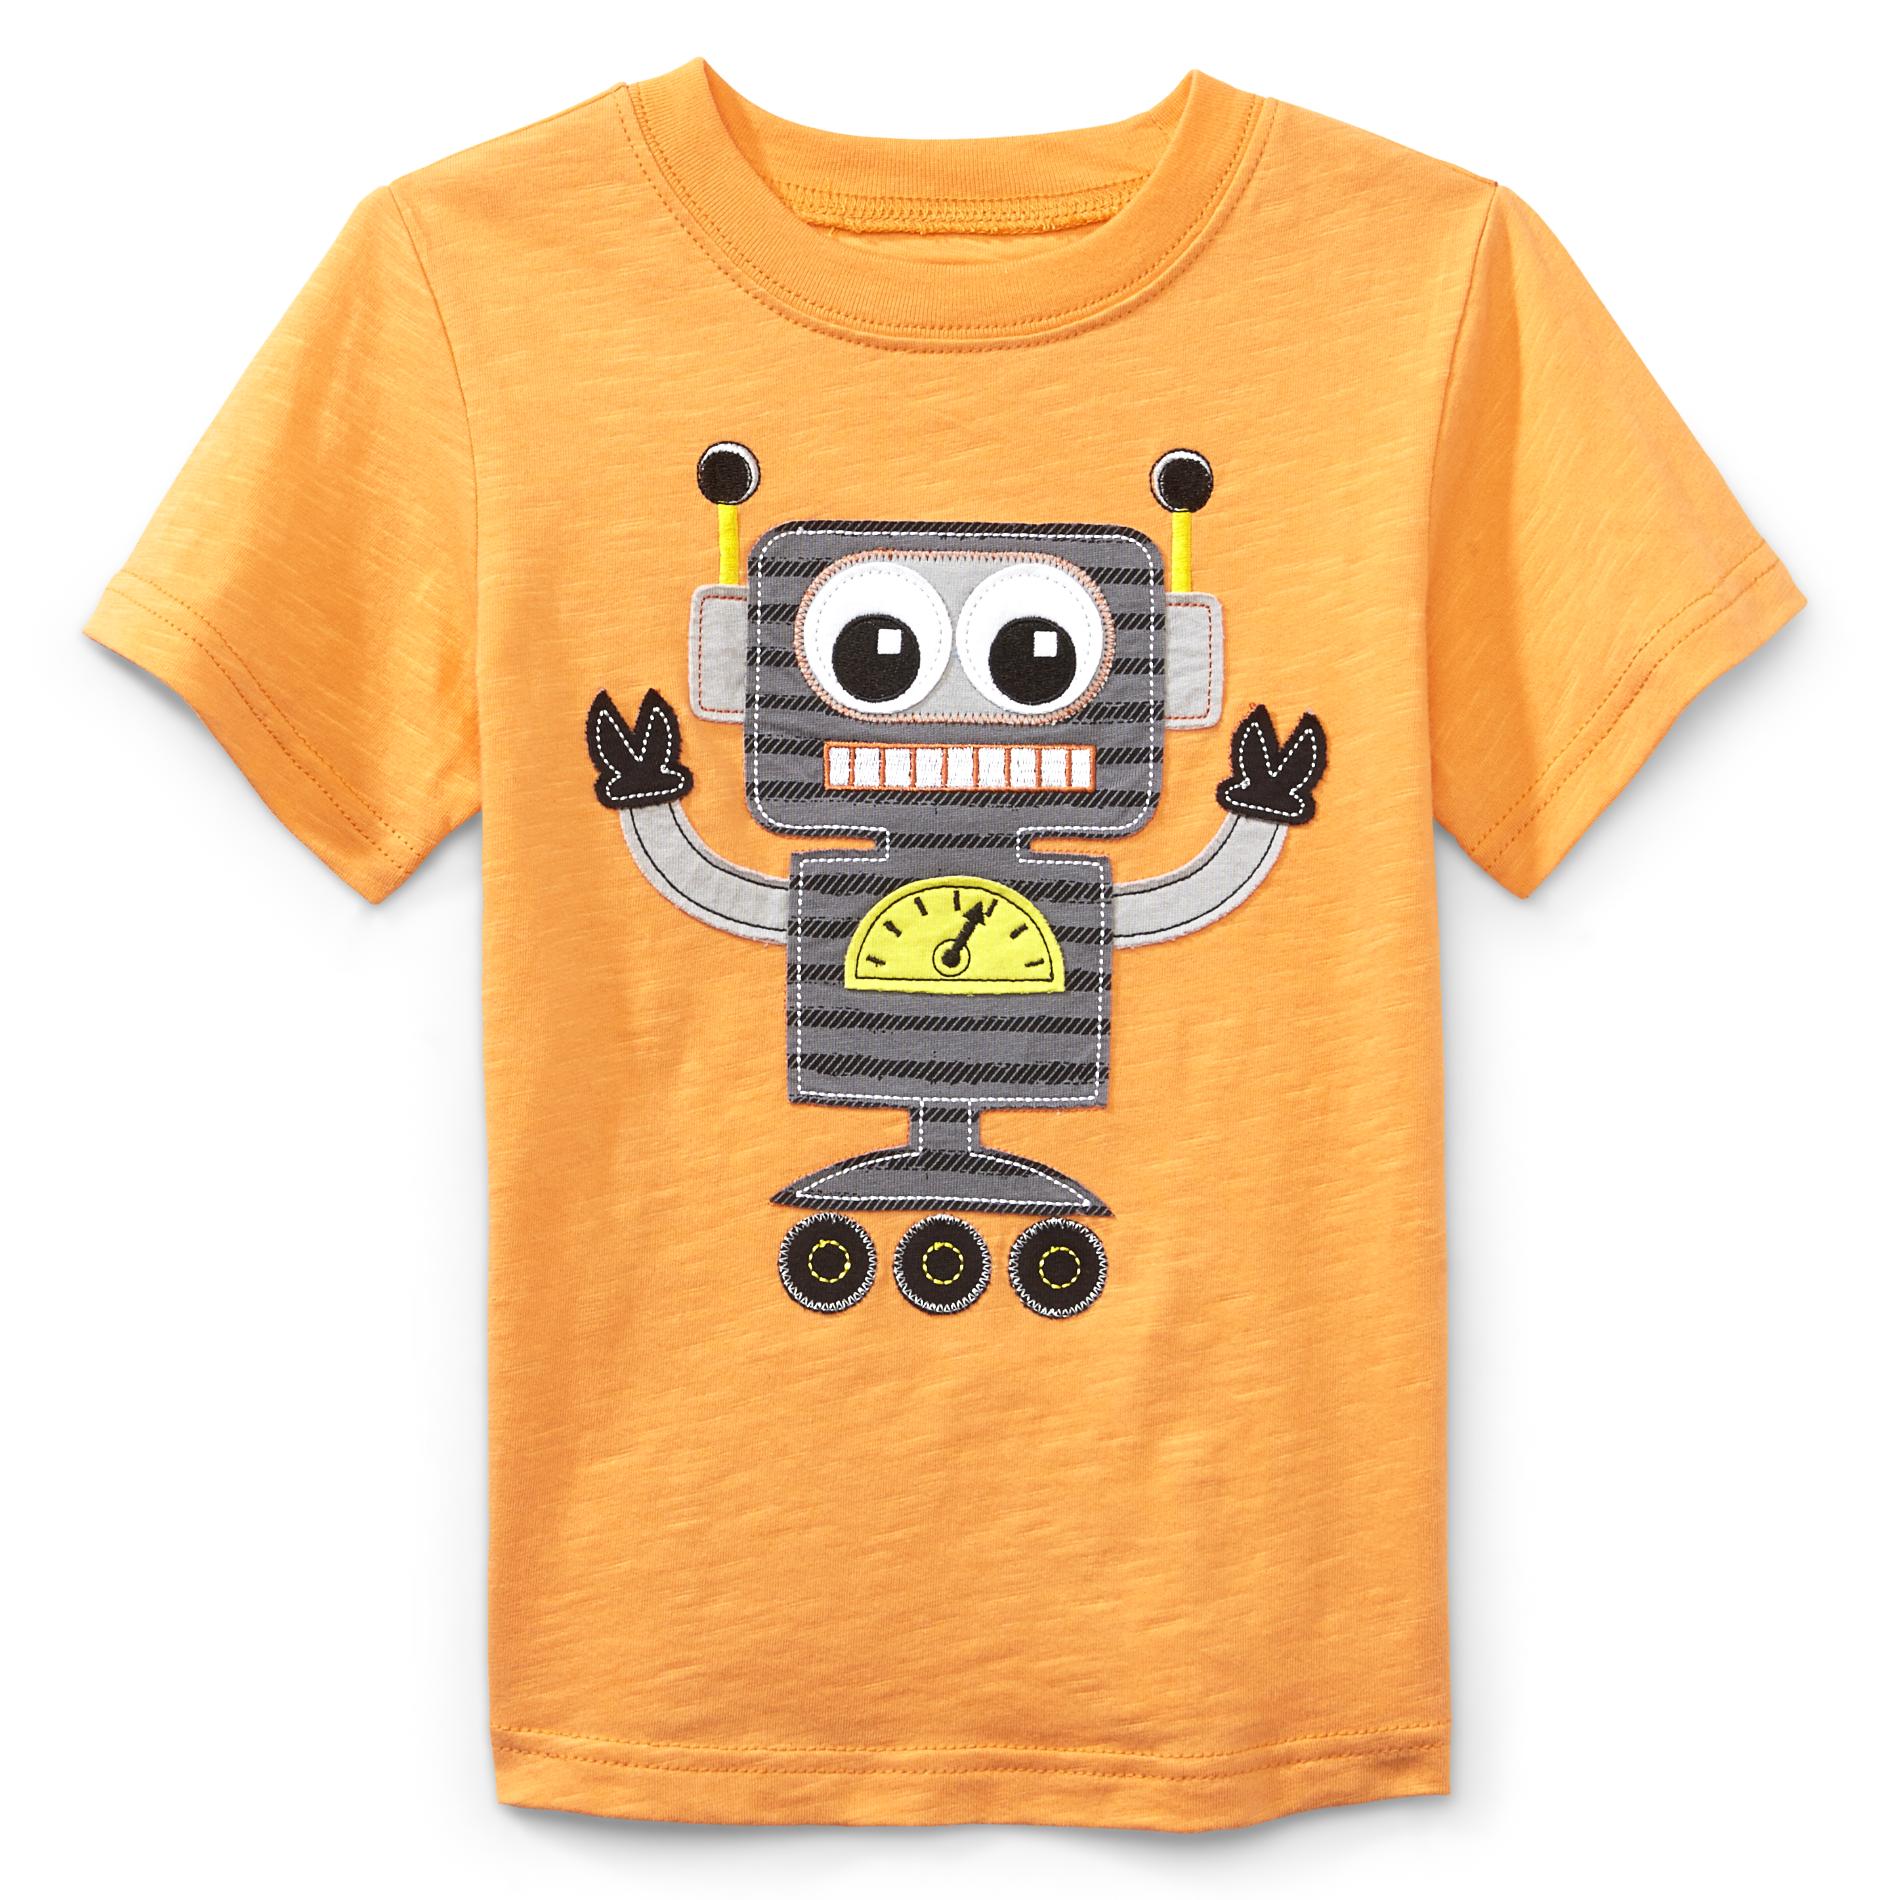 WonderKids Infant & Toddler Boy's Short-Sleeve Graphic T-Shirt - Robot